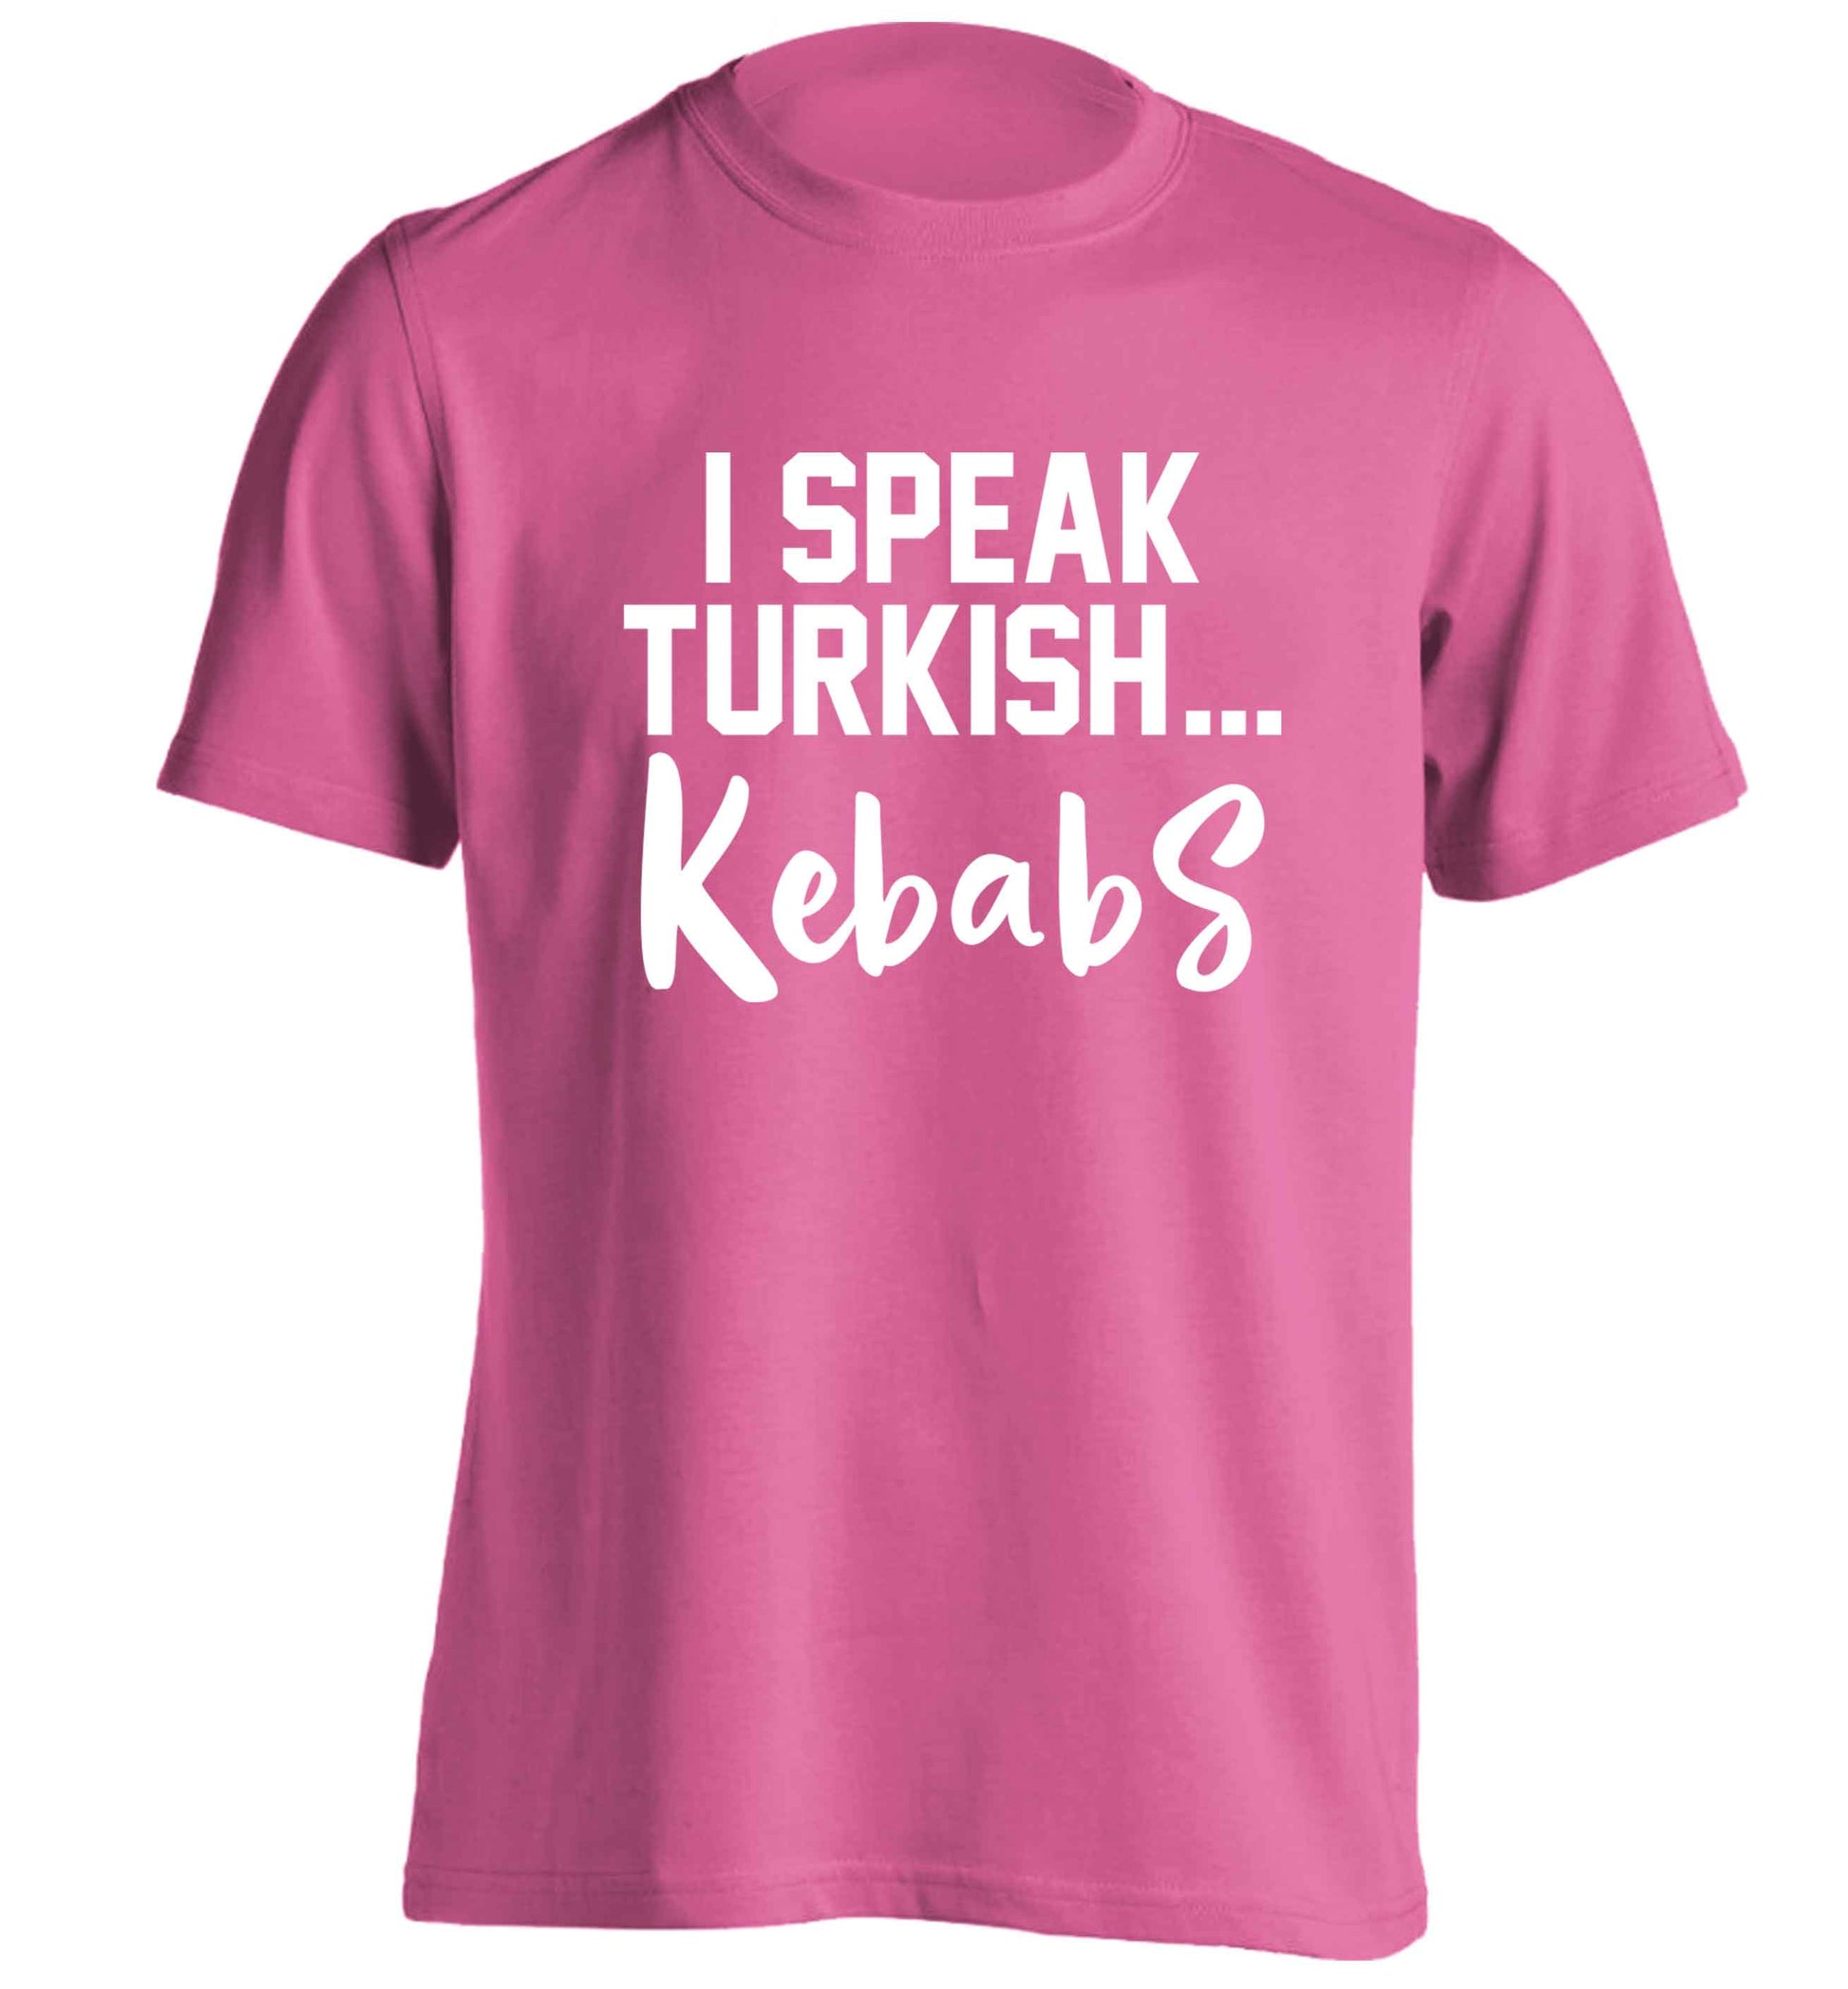 I speak Turkish...kebabs adults unisex pink Tshirt 2XL